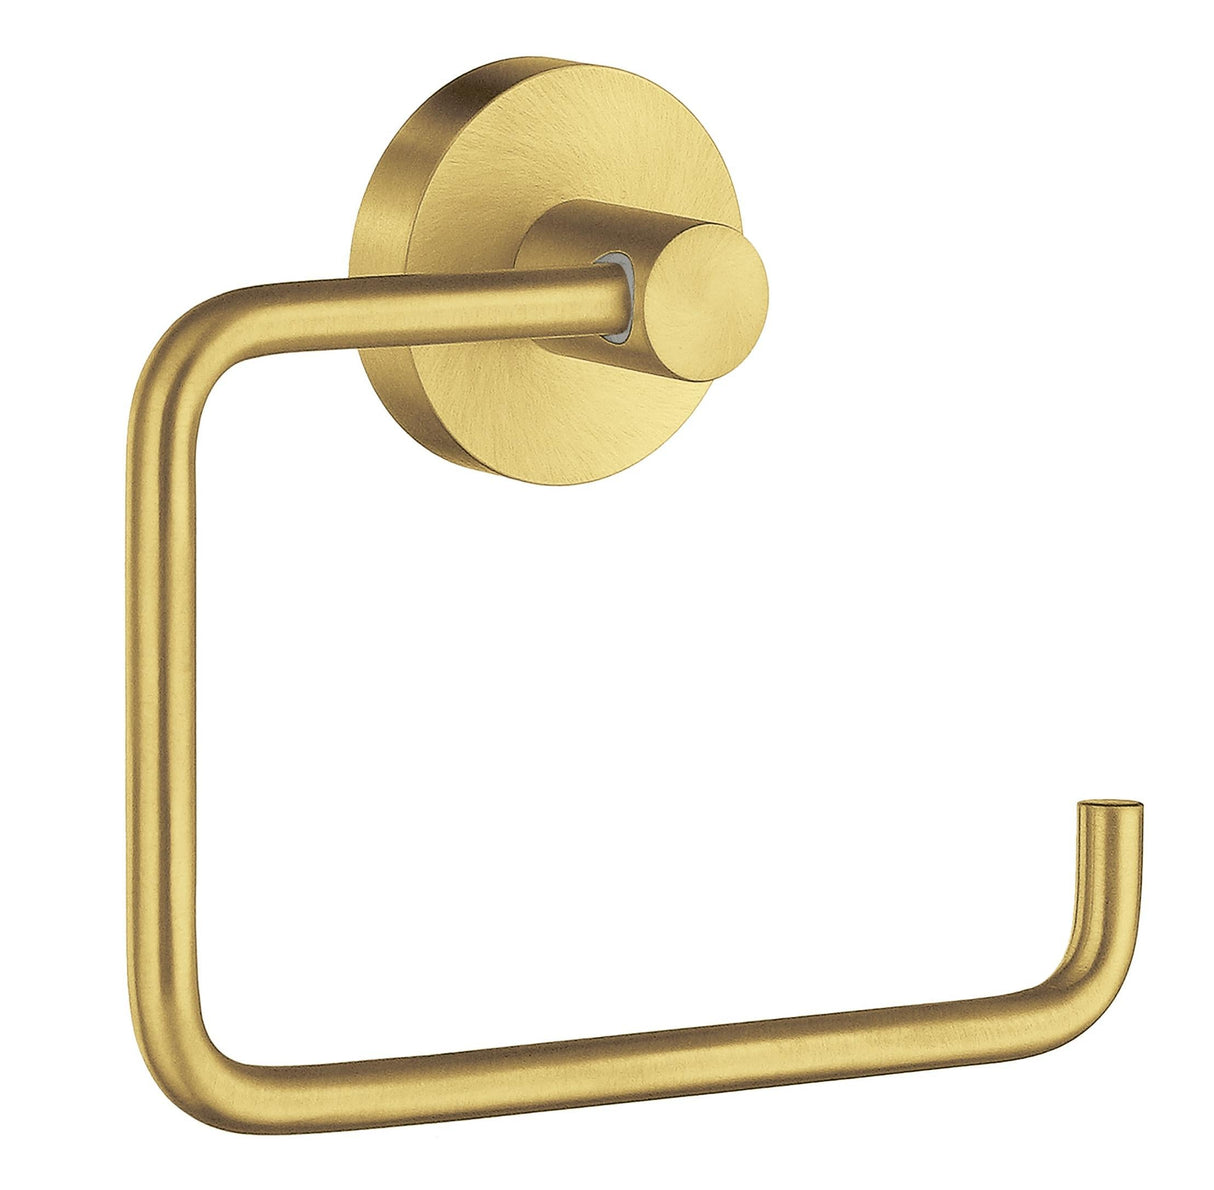 Smedbo Home Toilet Roll Holder in Brushed Brass